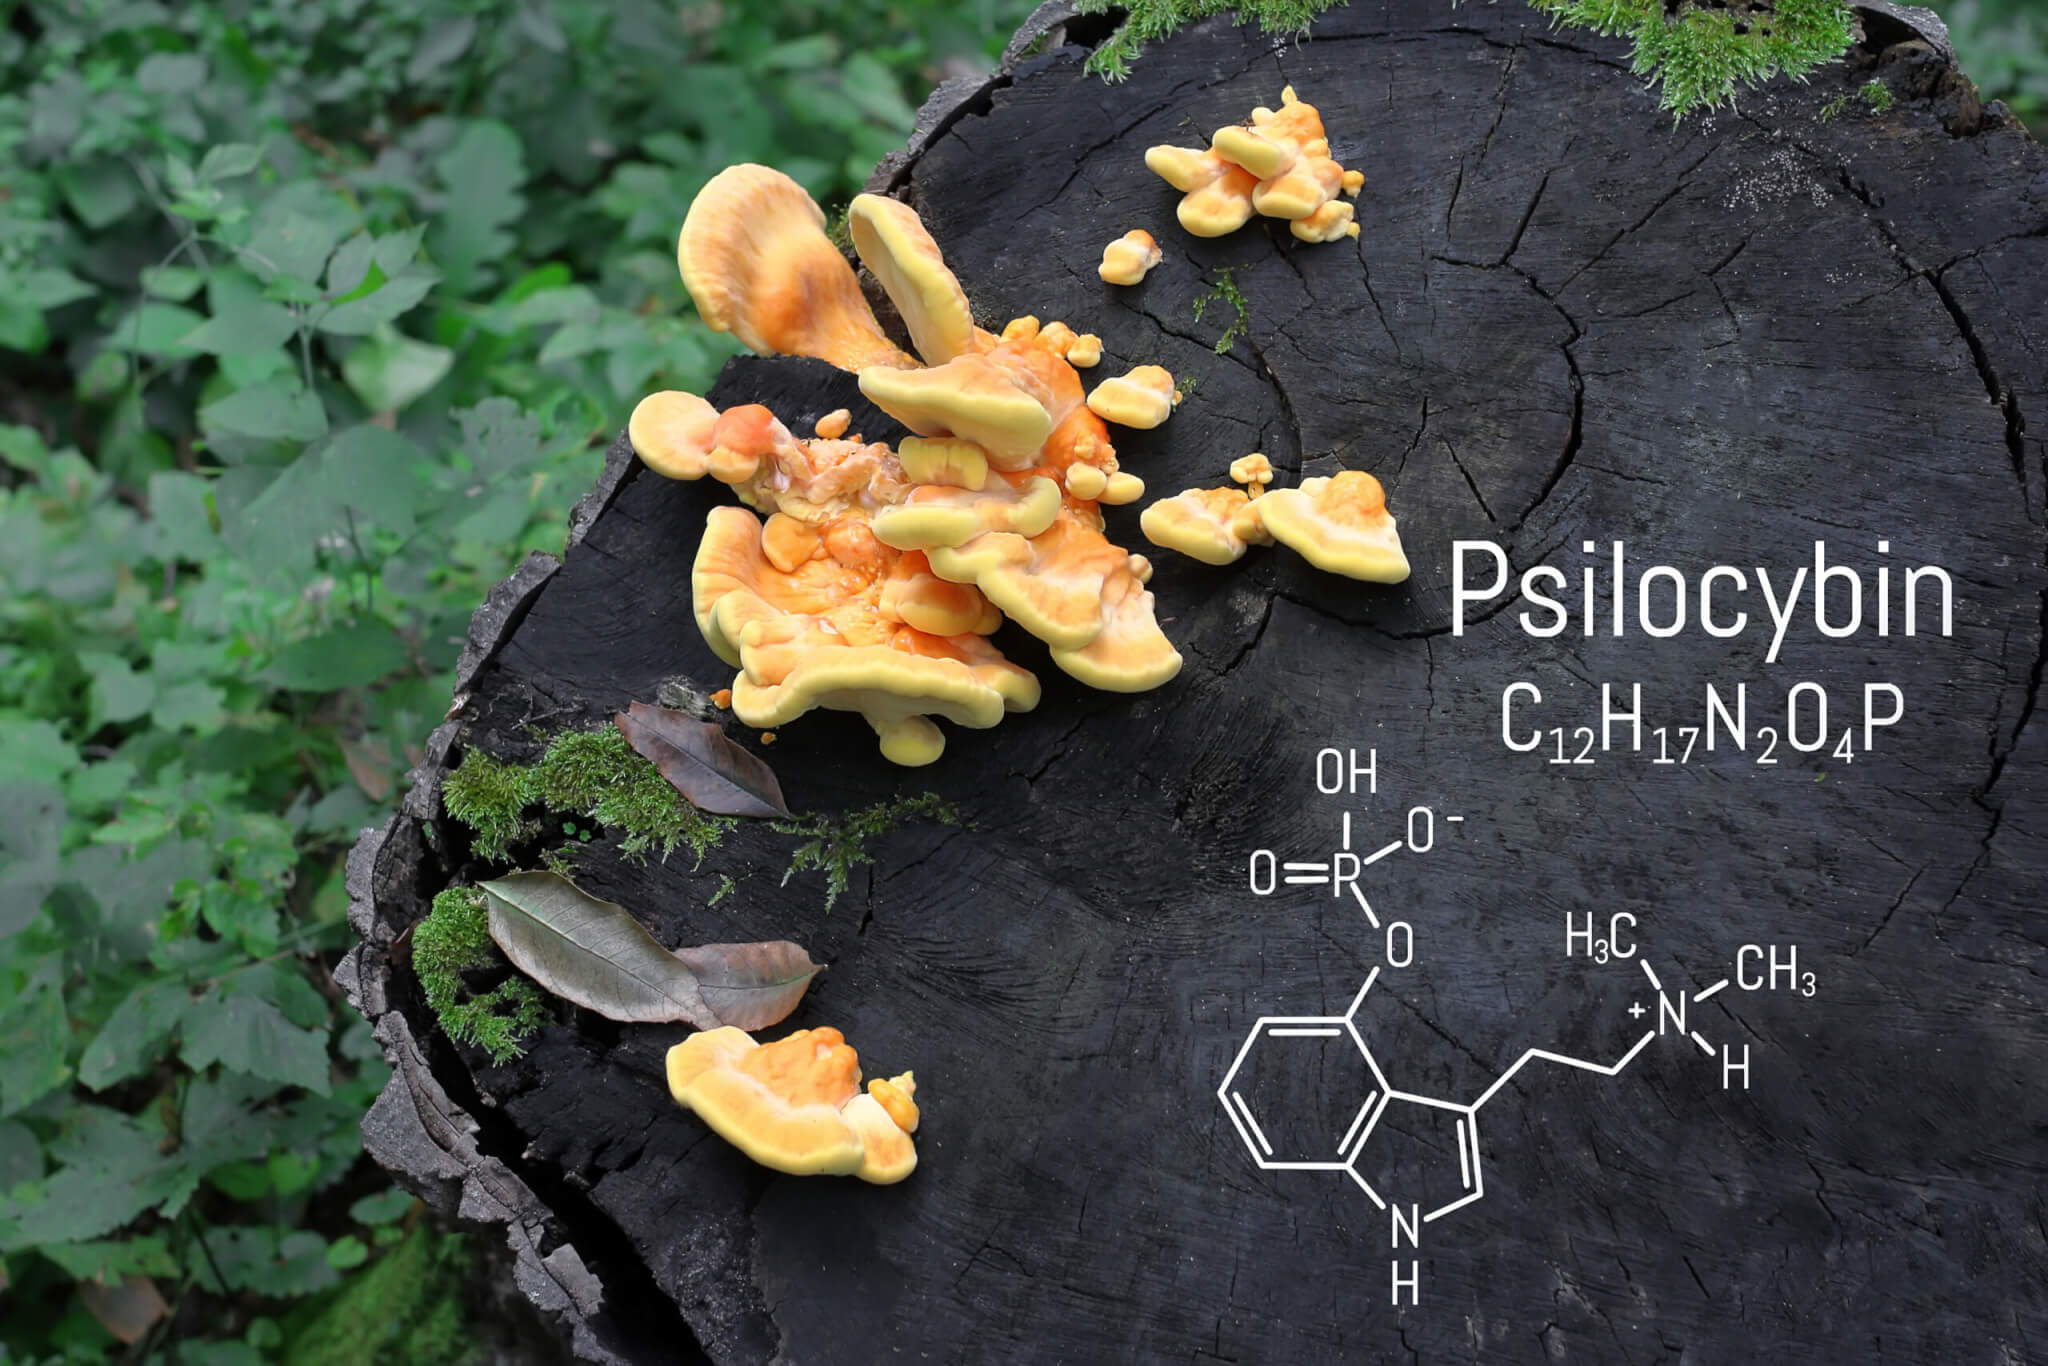 Chemical formula of psilocybin found in magic mushrooms